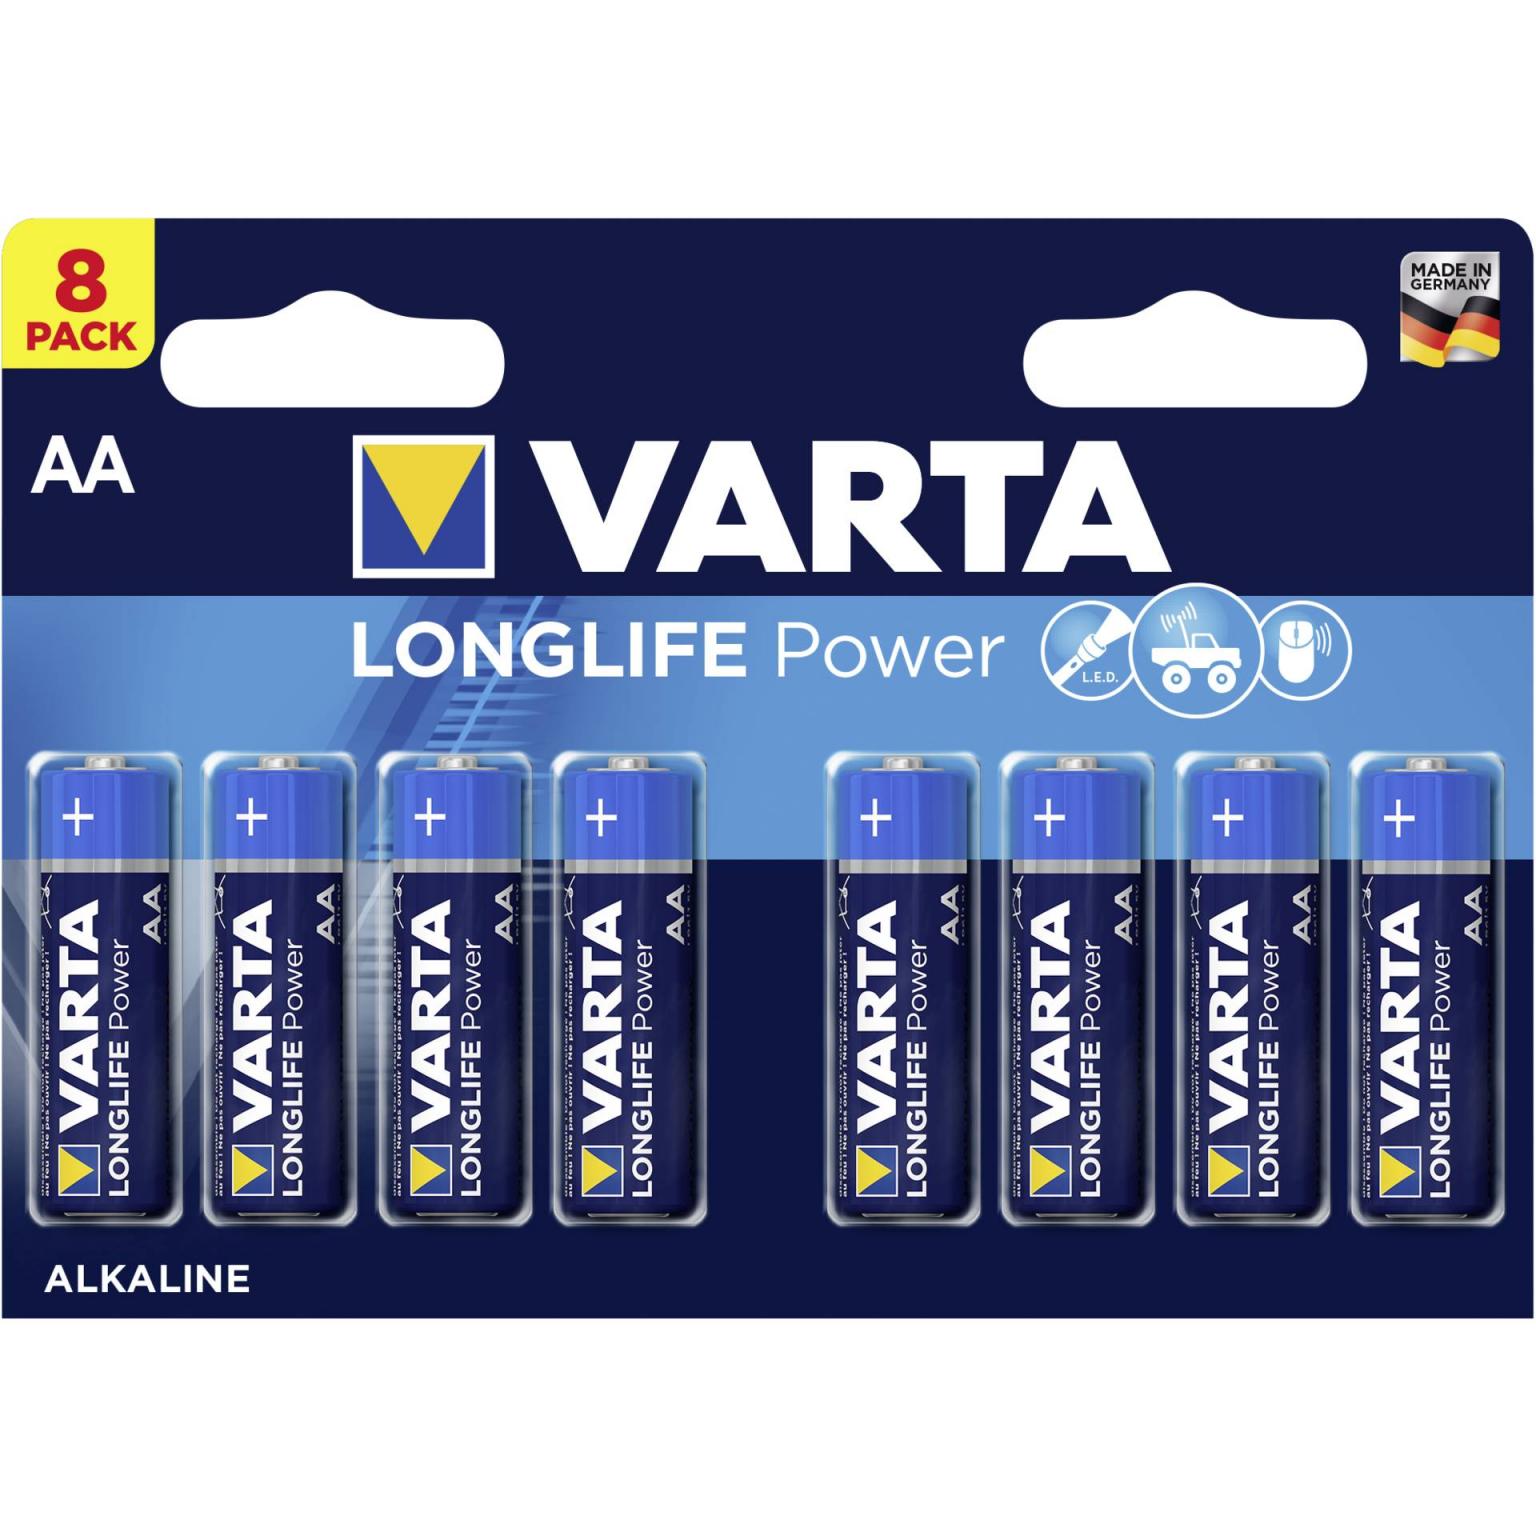 20x8 Varta High Energy Mignon AA LR 6 VPE binnenverpakking - Varta